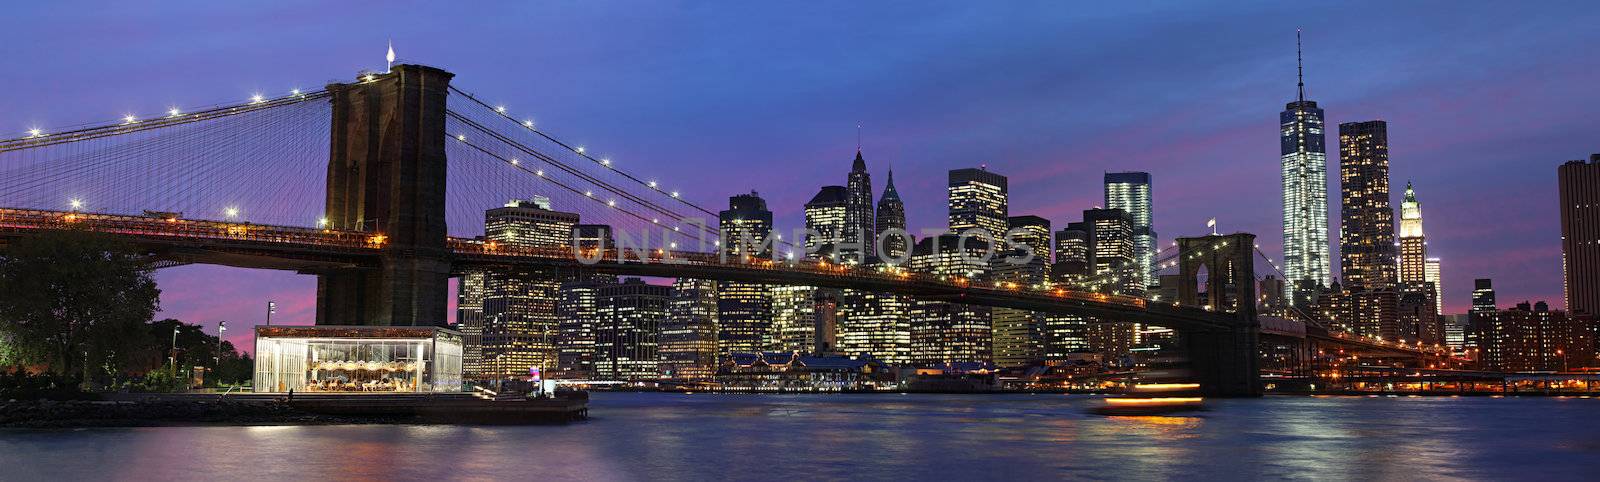 Brooklyn Bridge and Manhattan at sunset by palinchak